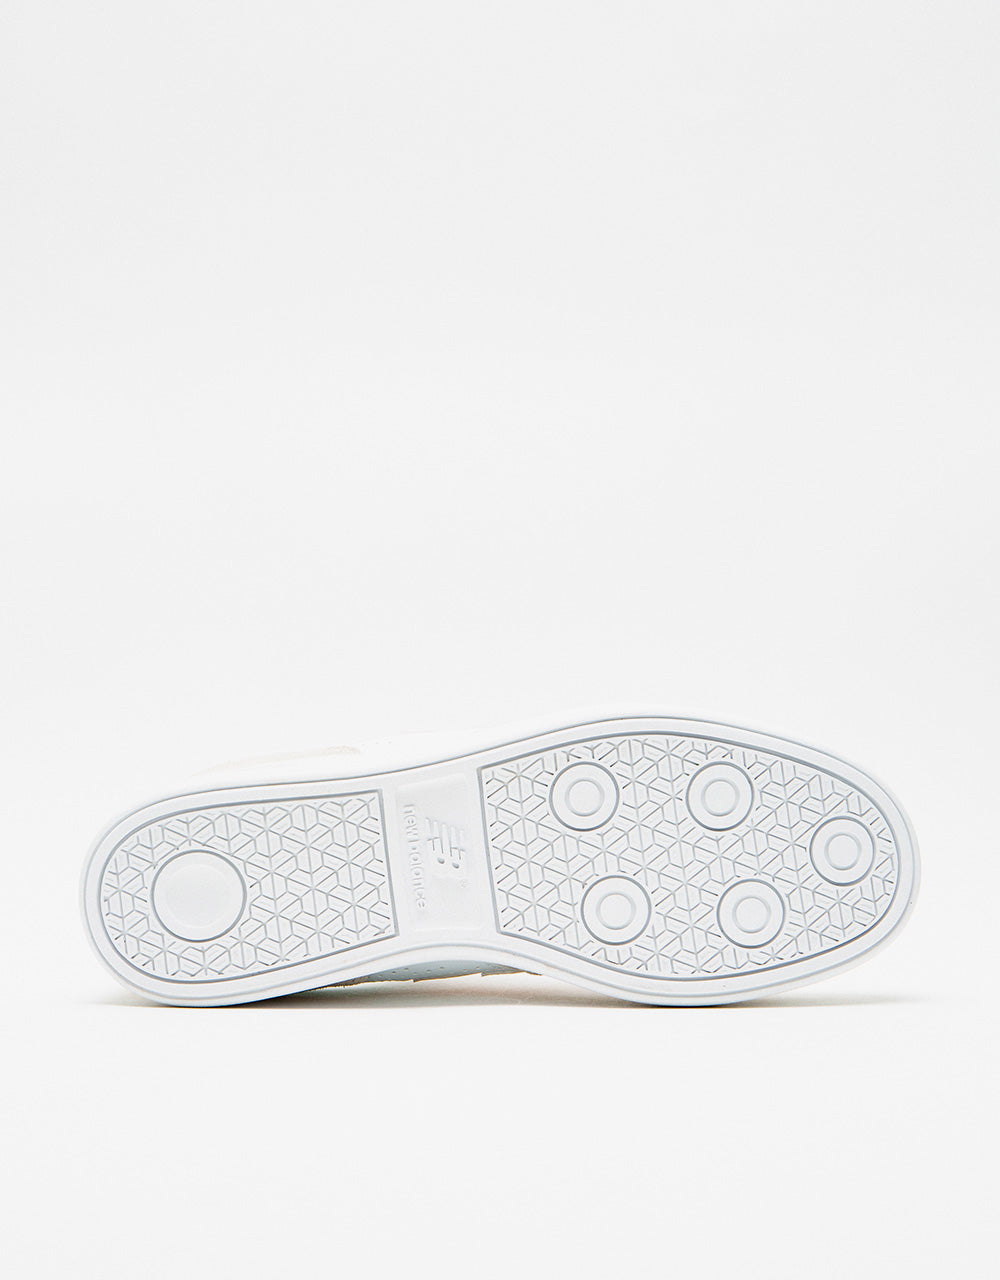 New Balance Numeric 508 Skate Shoes - White/Gold